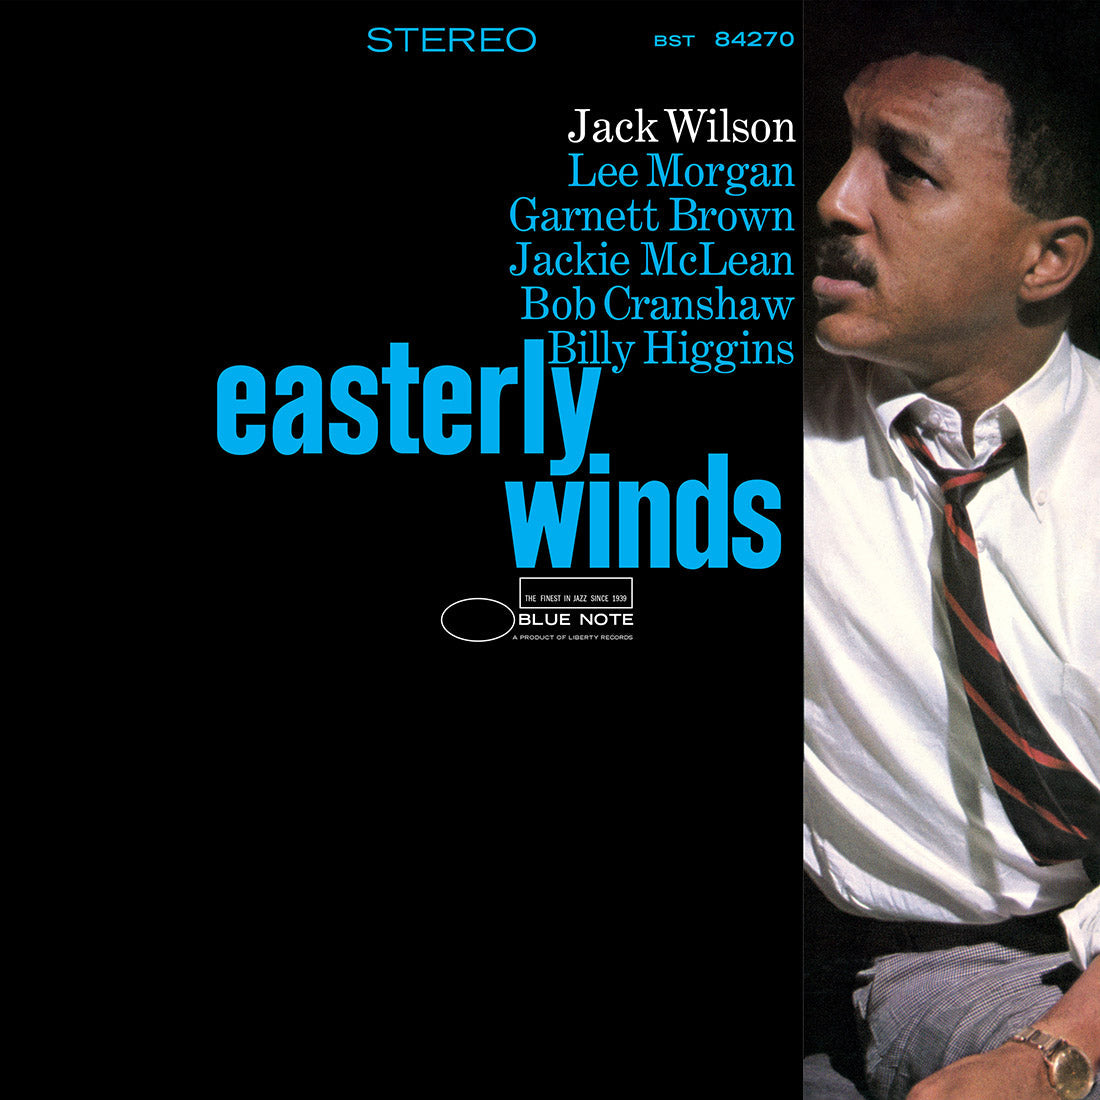 Wilson, Jack "Easterly Winds" [Blue Note Tone Poet Series]